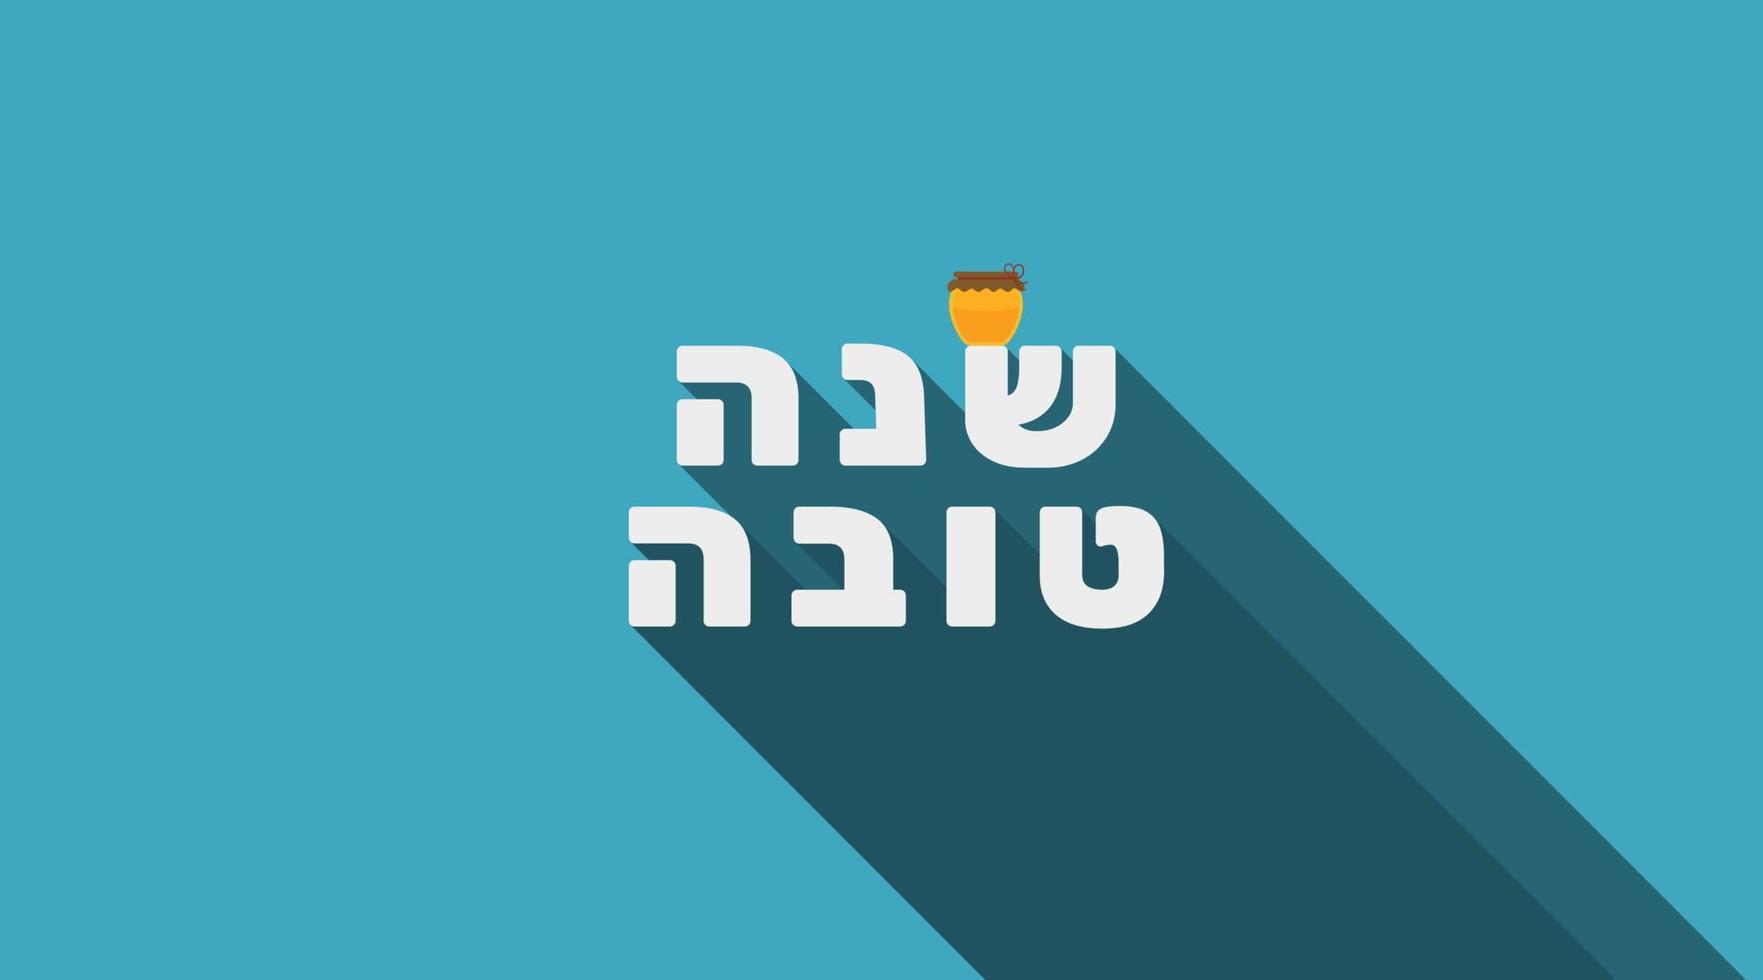 voeux de vacances de rosh hashanah avec icône de pot de miel et texte hébreu vecteur